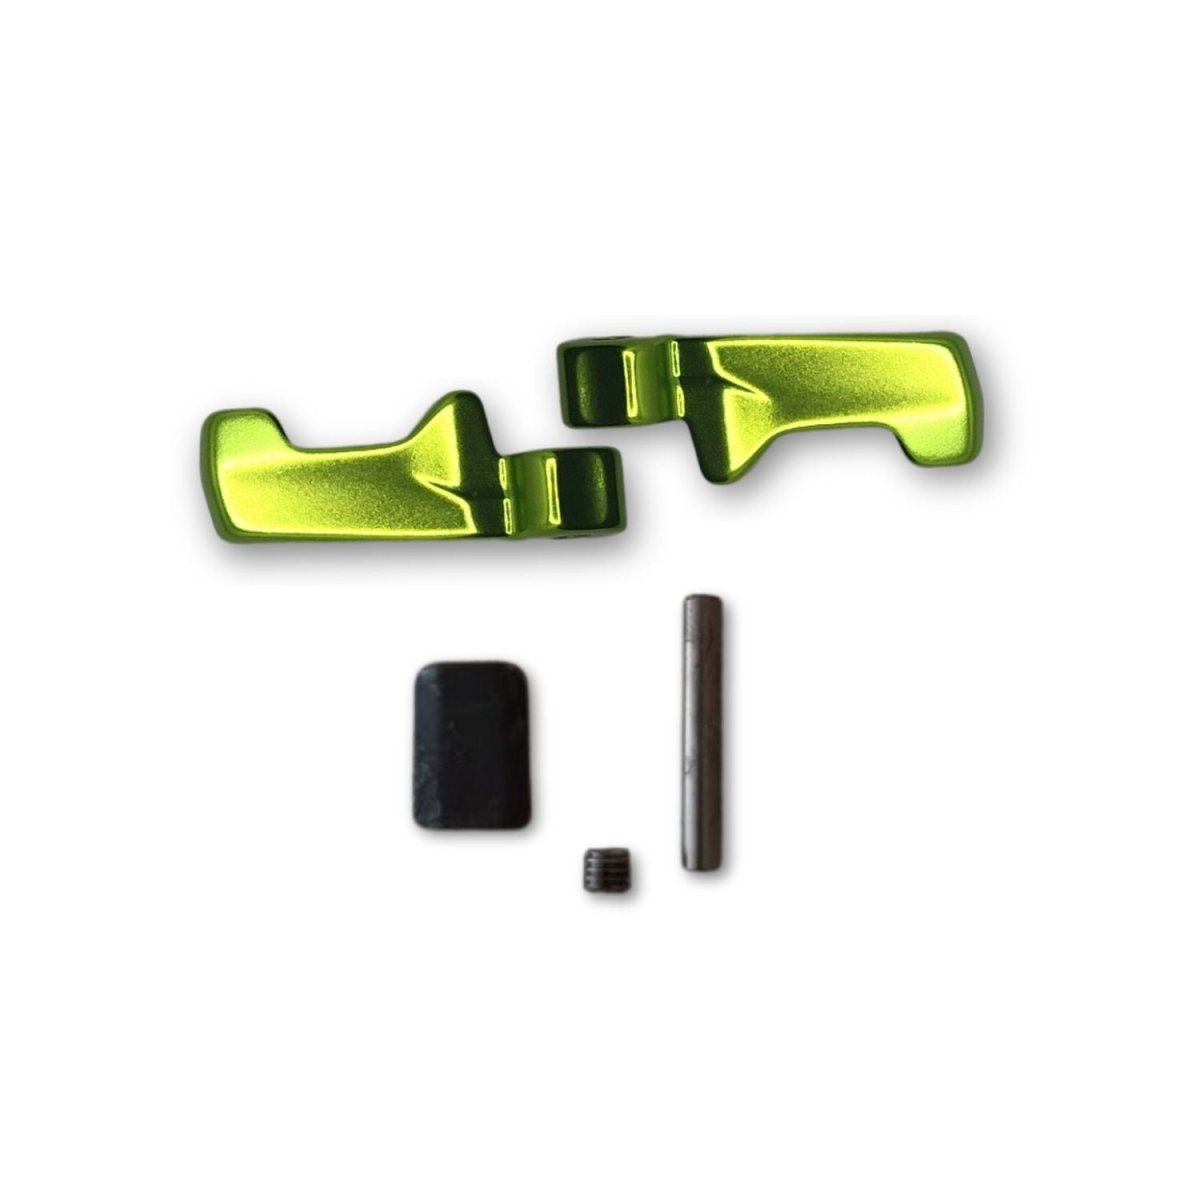 ZED Heel Lift Repair Kit - Parts - G3 Store Canada